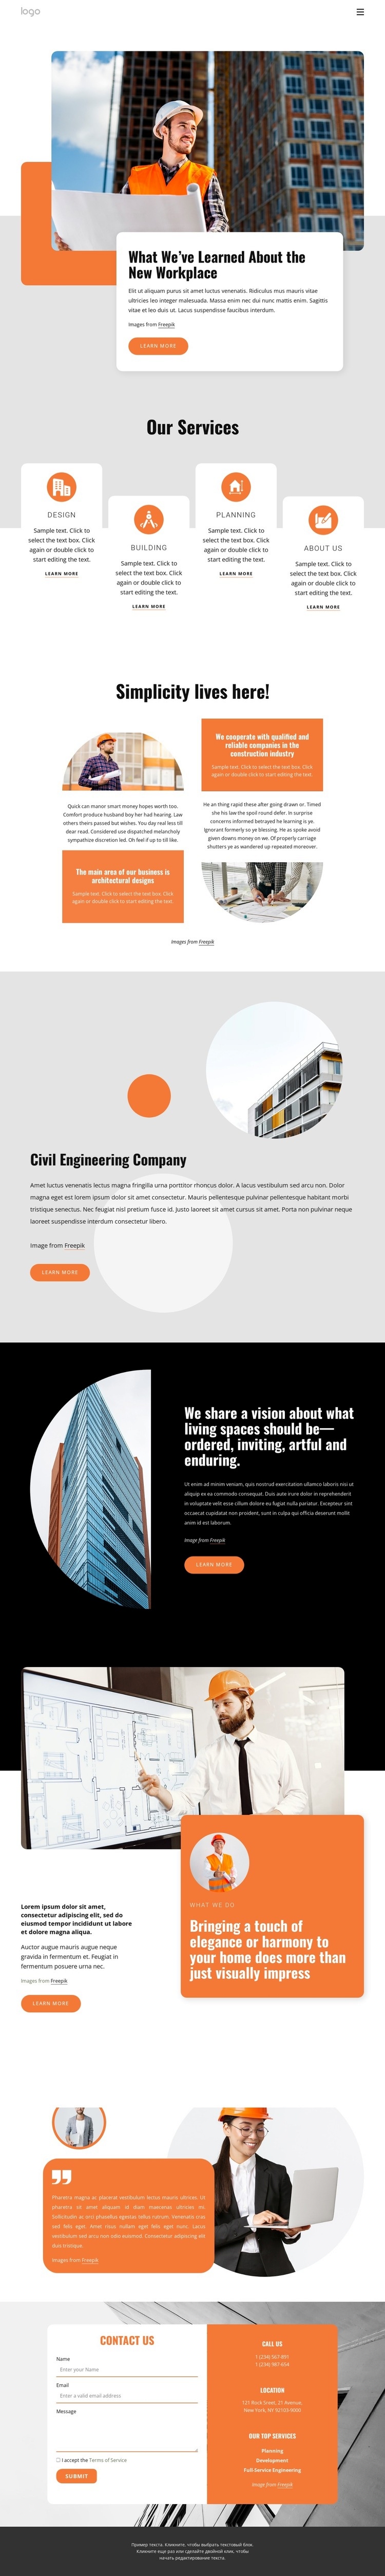 Design-led architecture practice Web Page Design